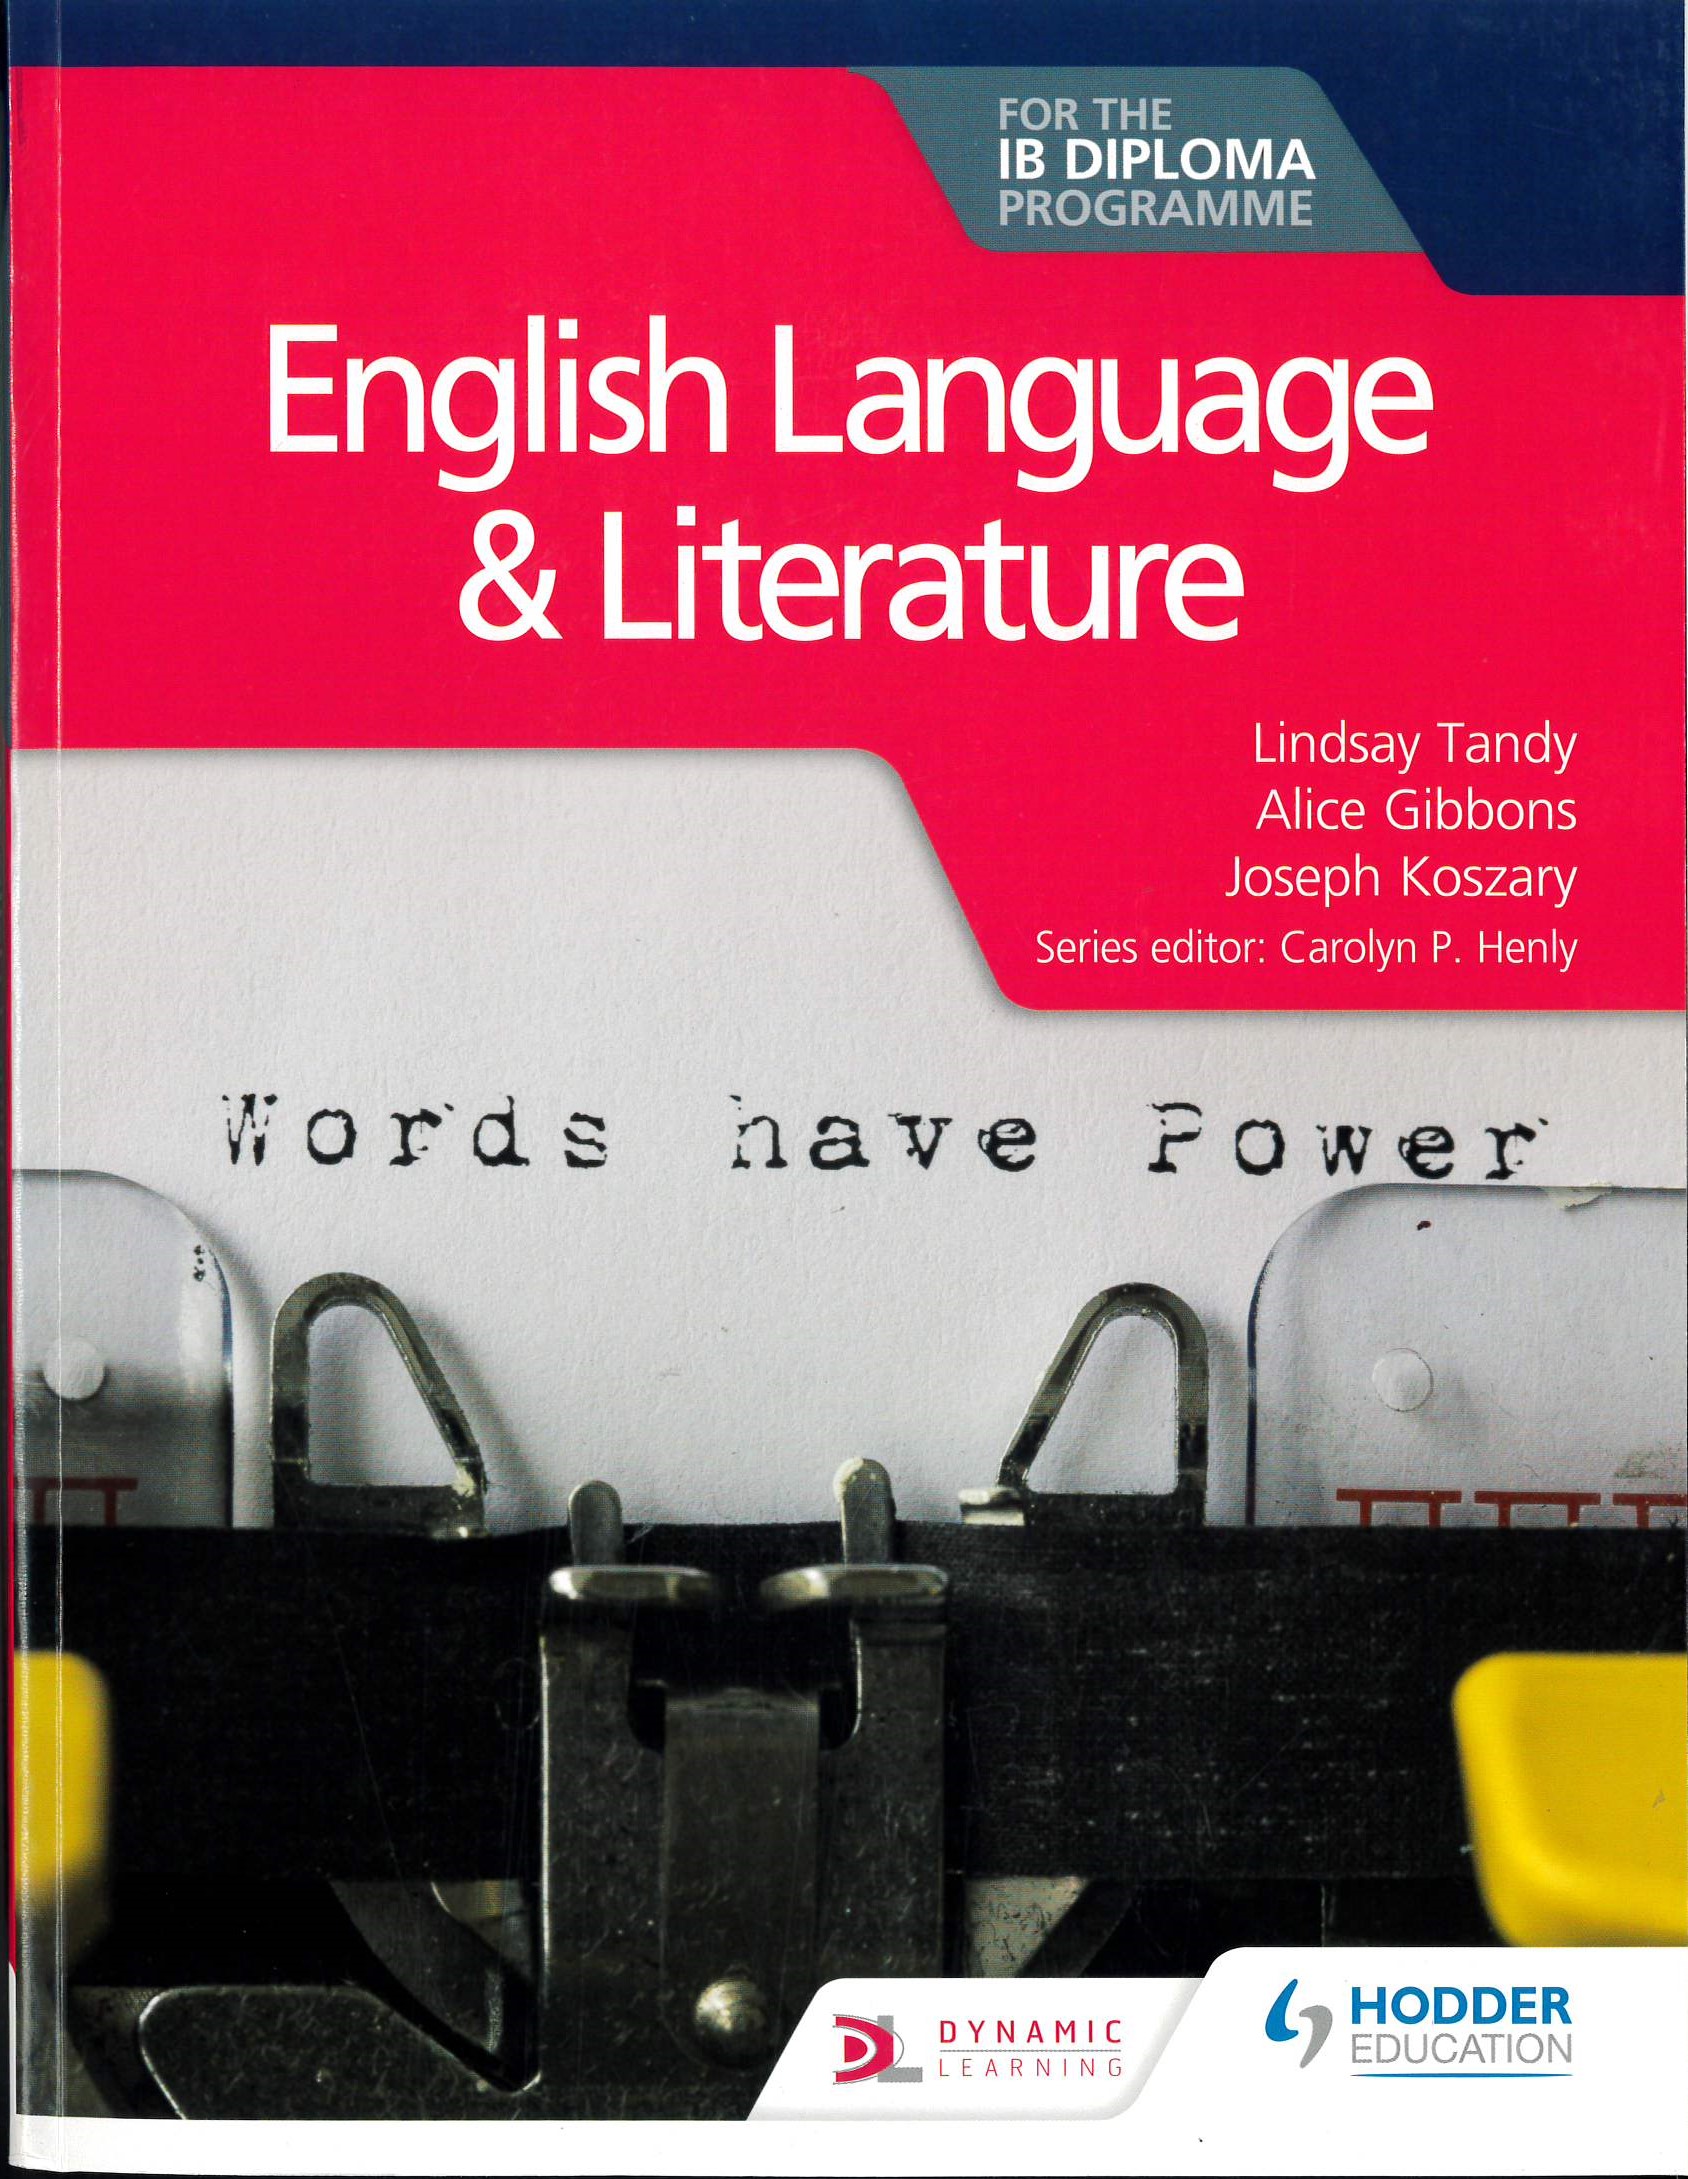 English language & literature for the IB diploma